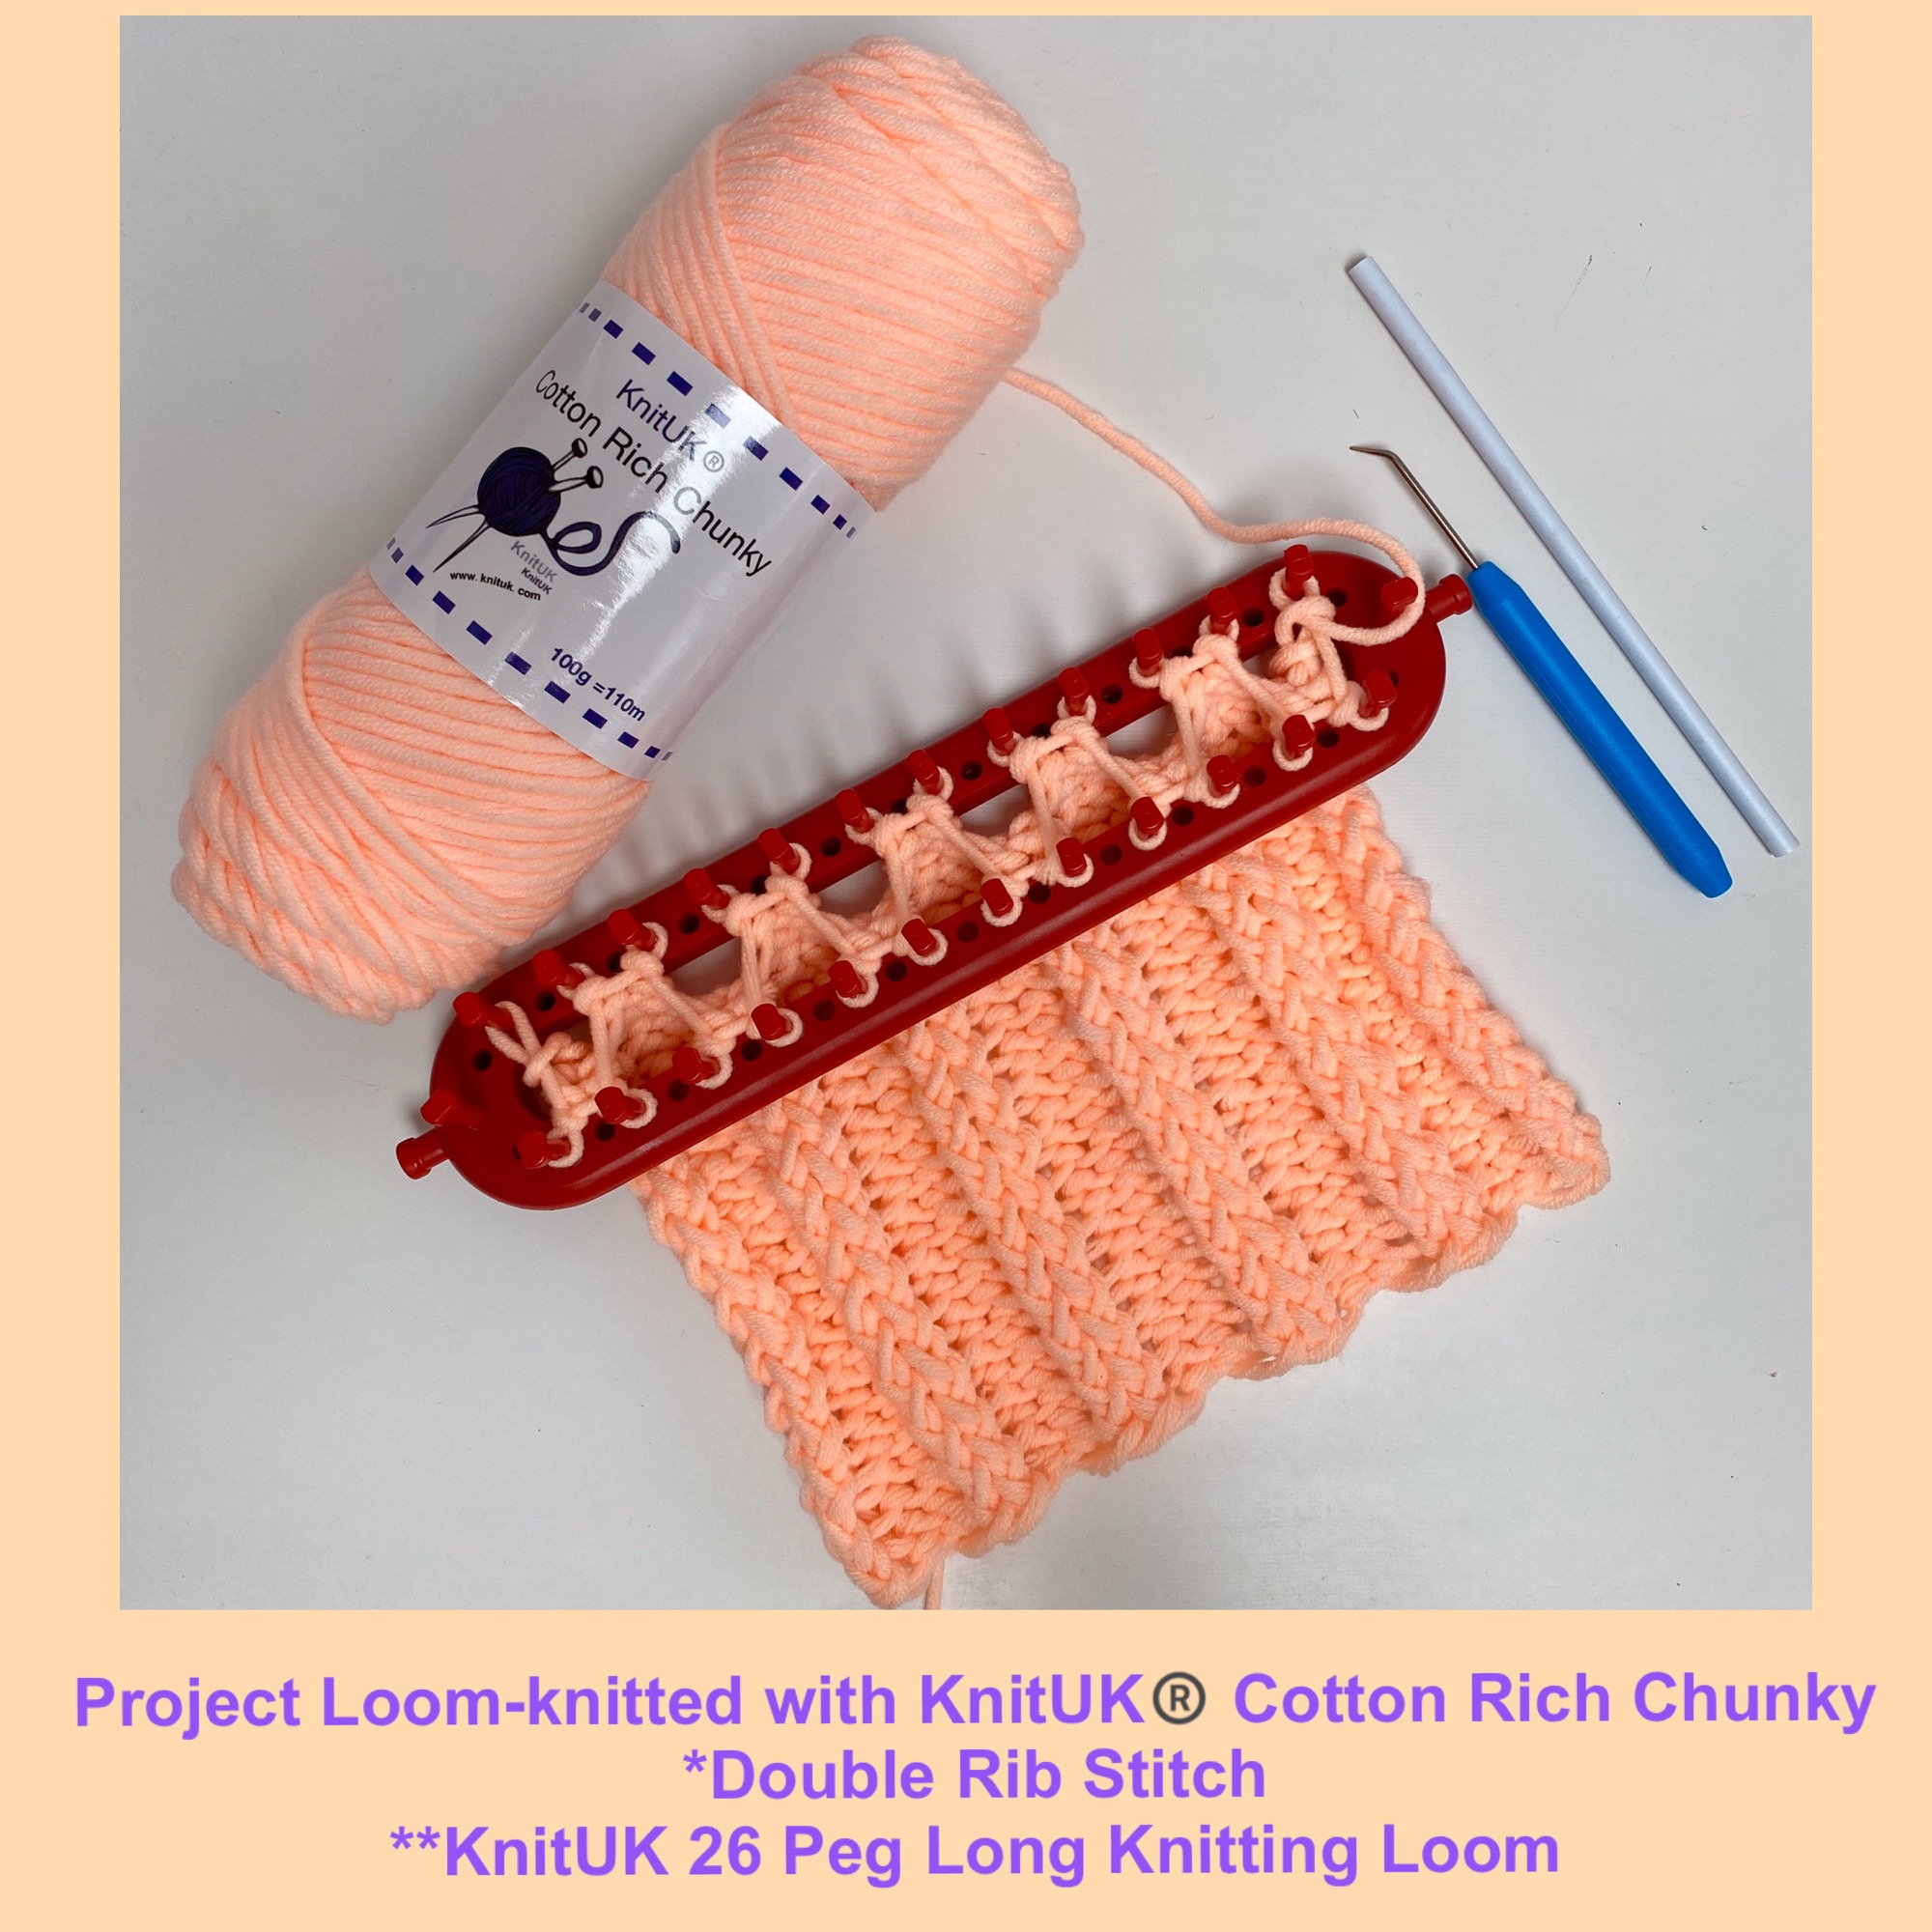 KnitUK cotton rich chunky yarn knitting loom scarf double rib